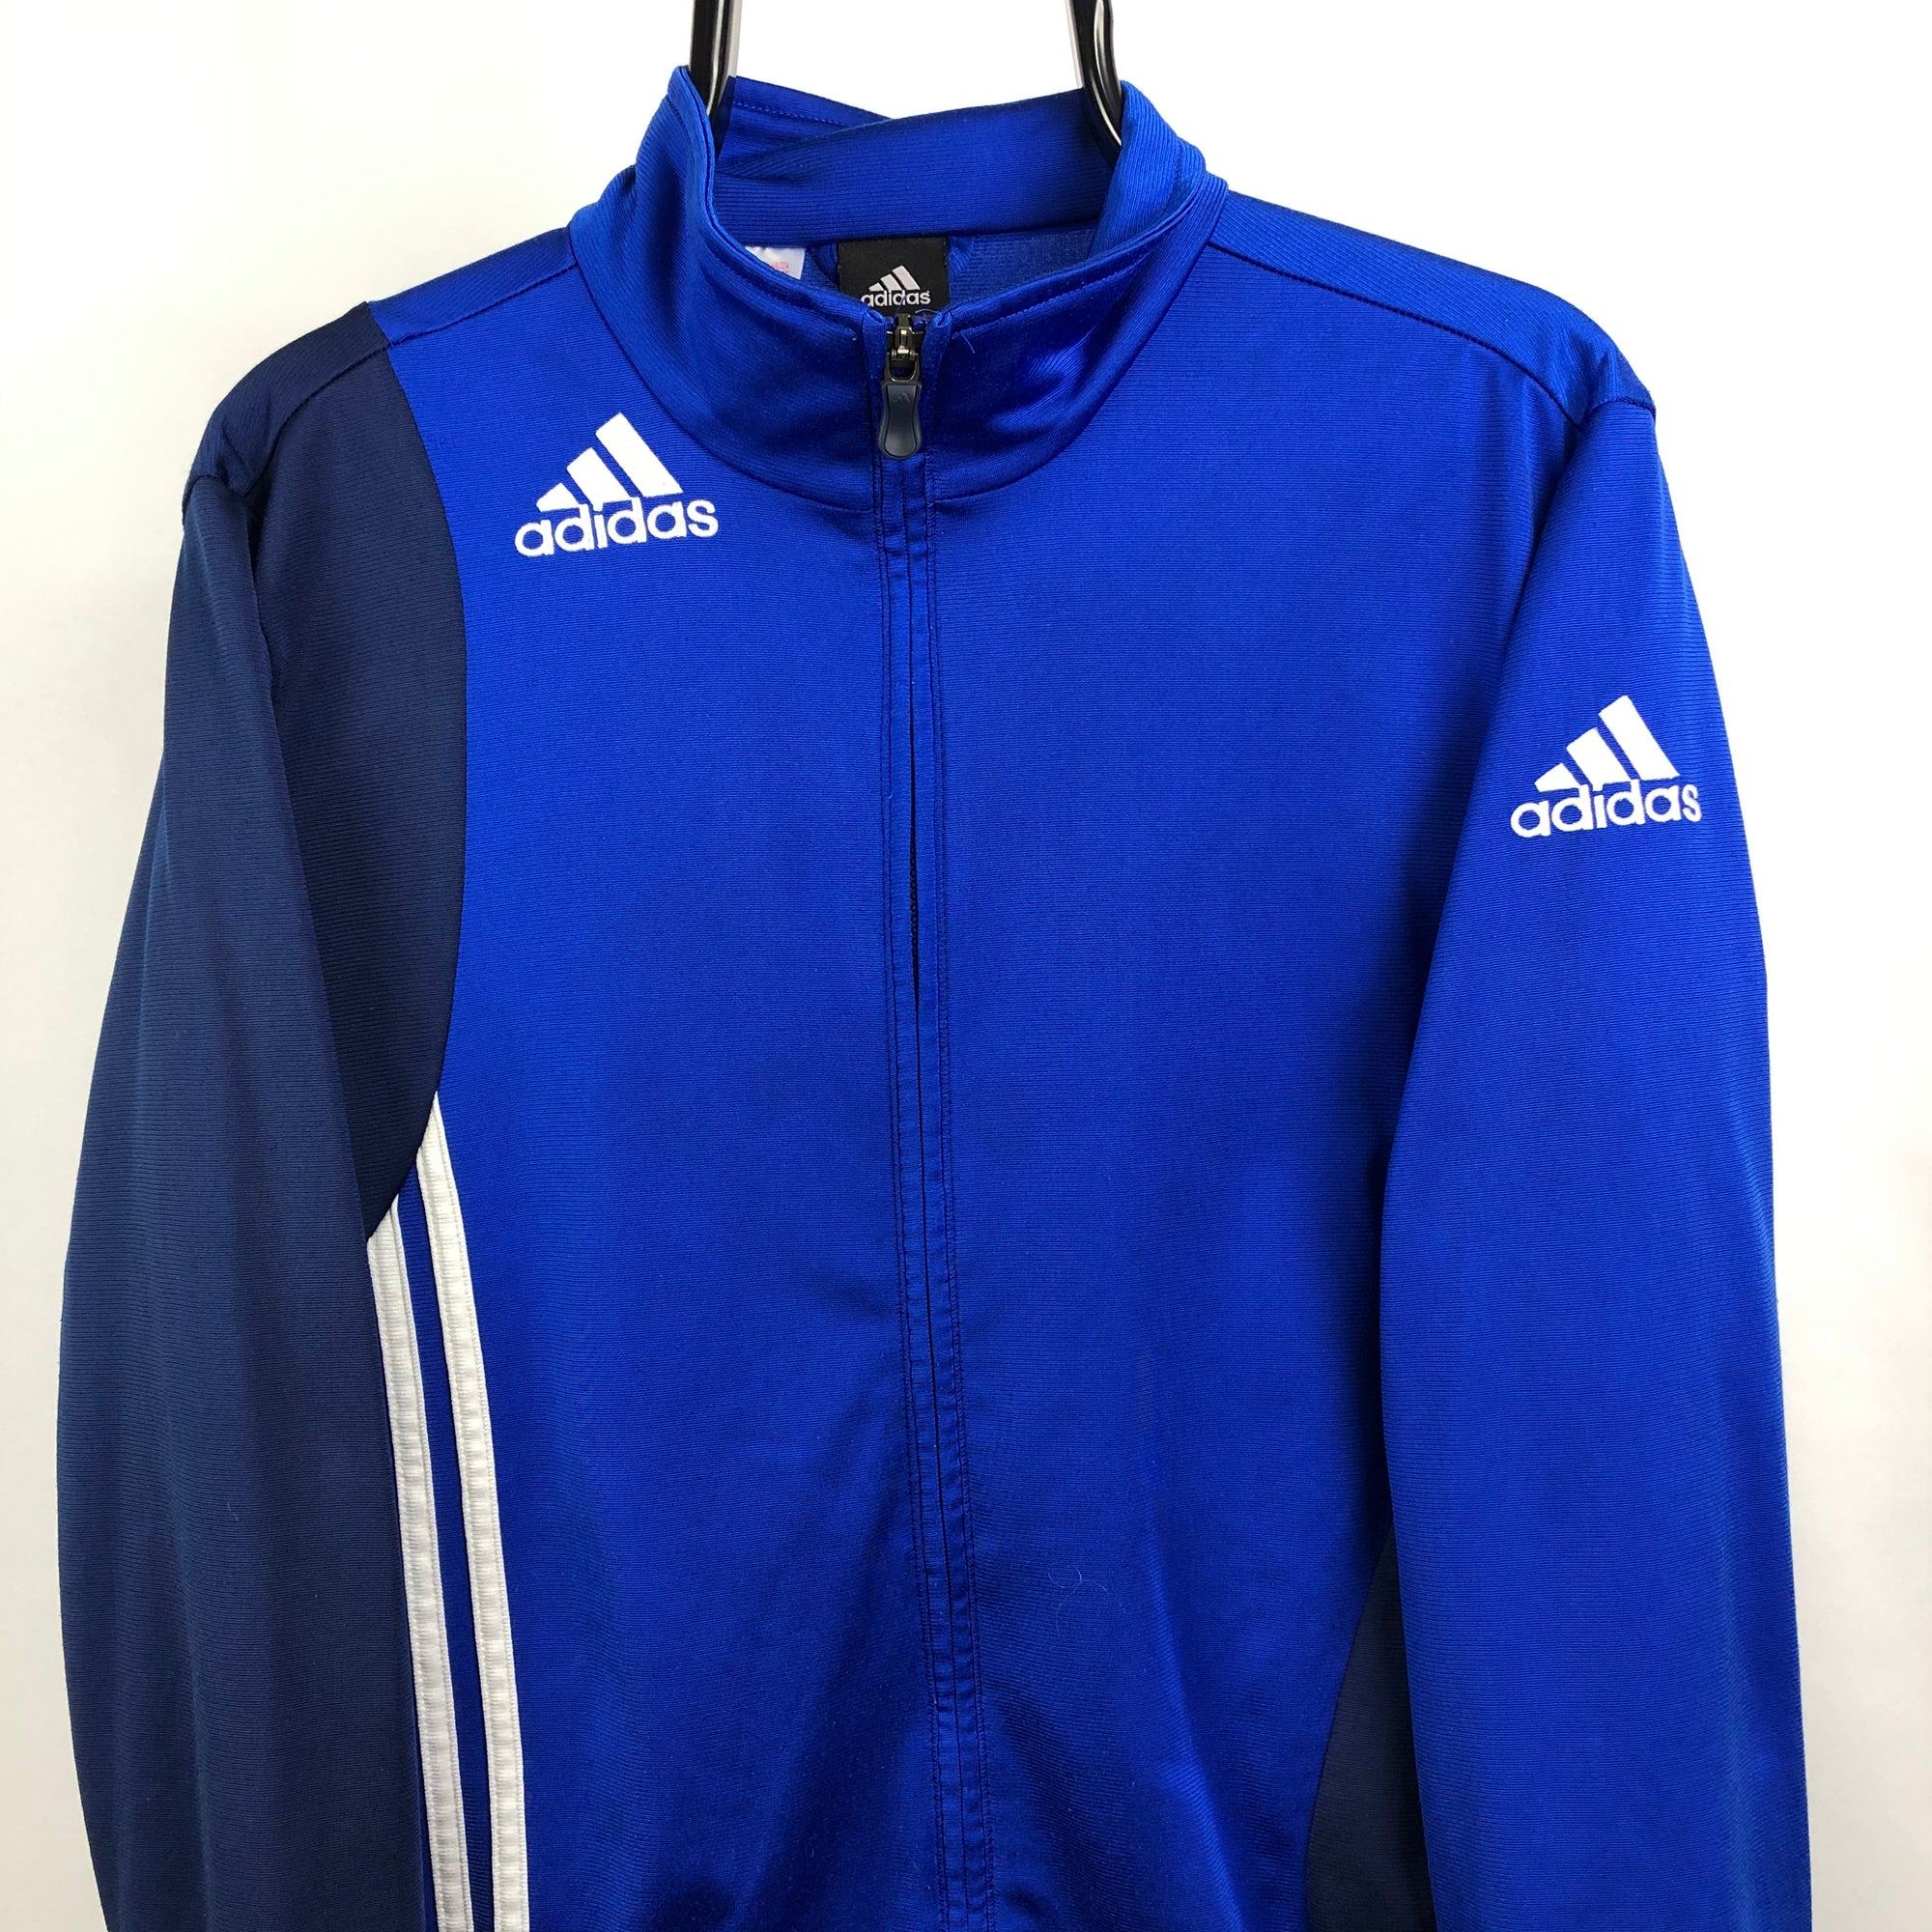 Adidas Track Jacket in Blue/Navy - Men's Medium/Women's Large